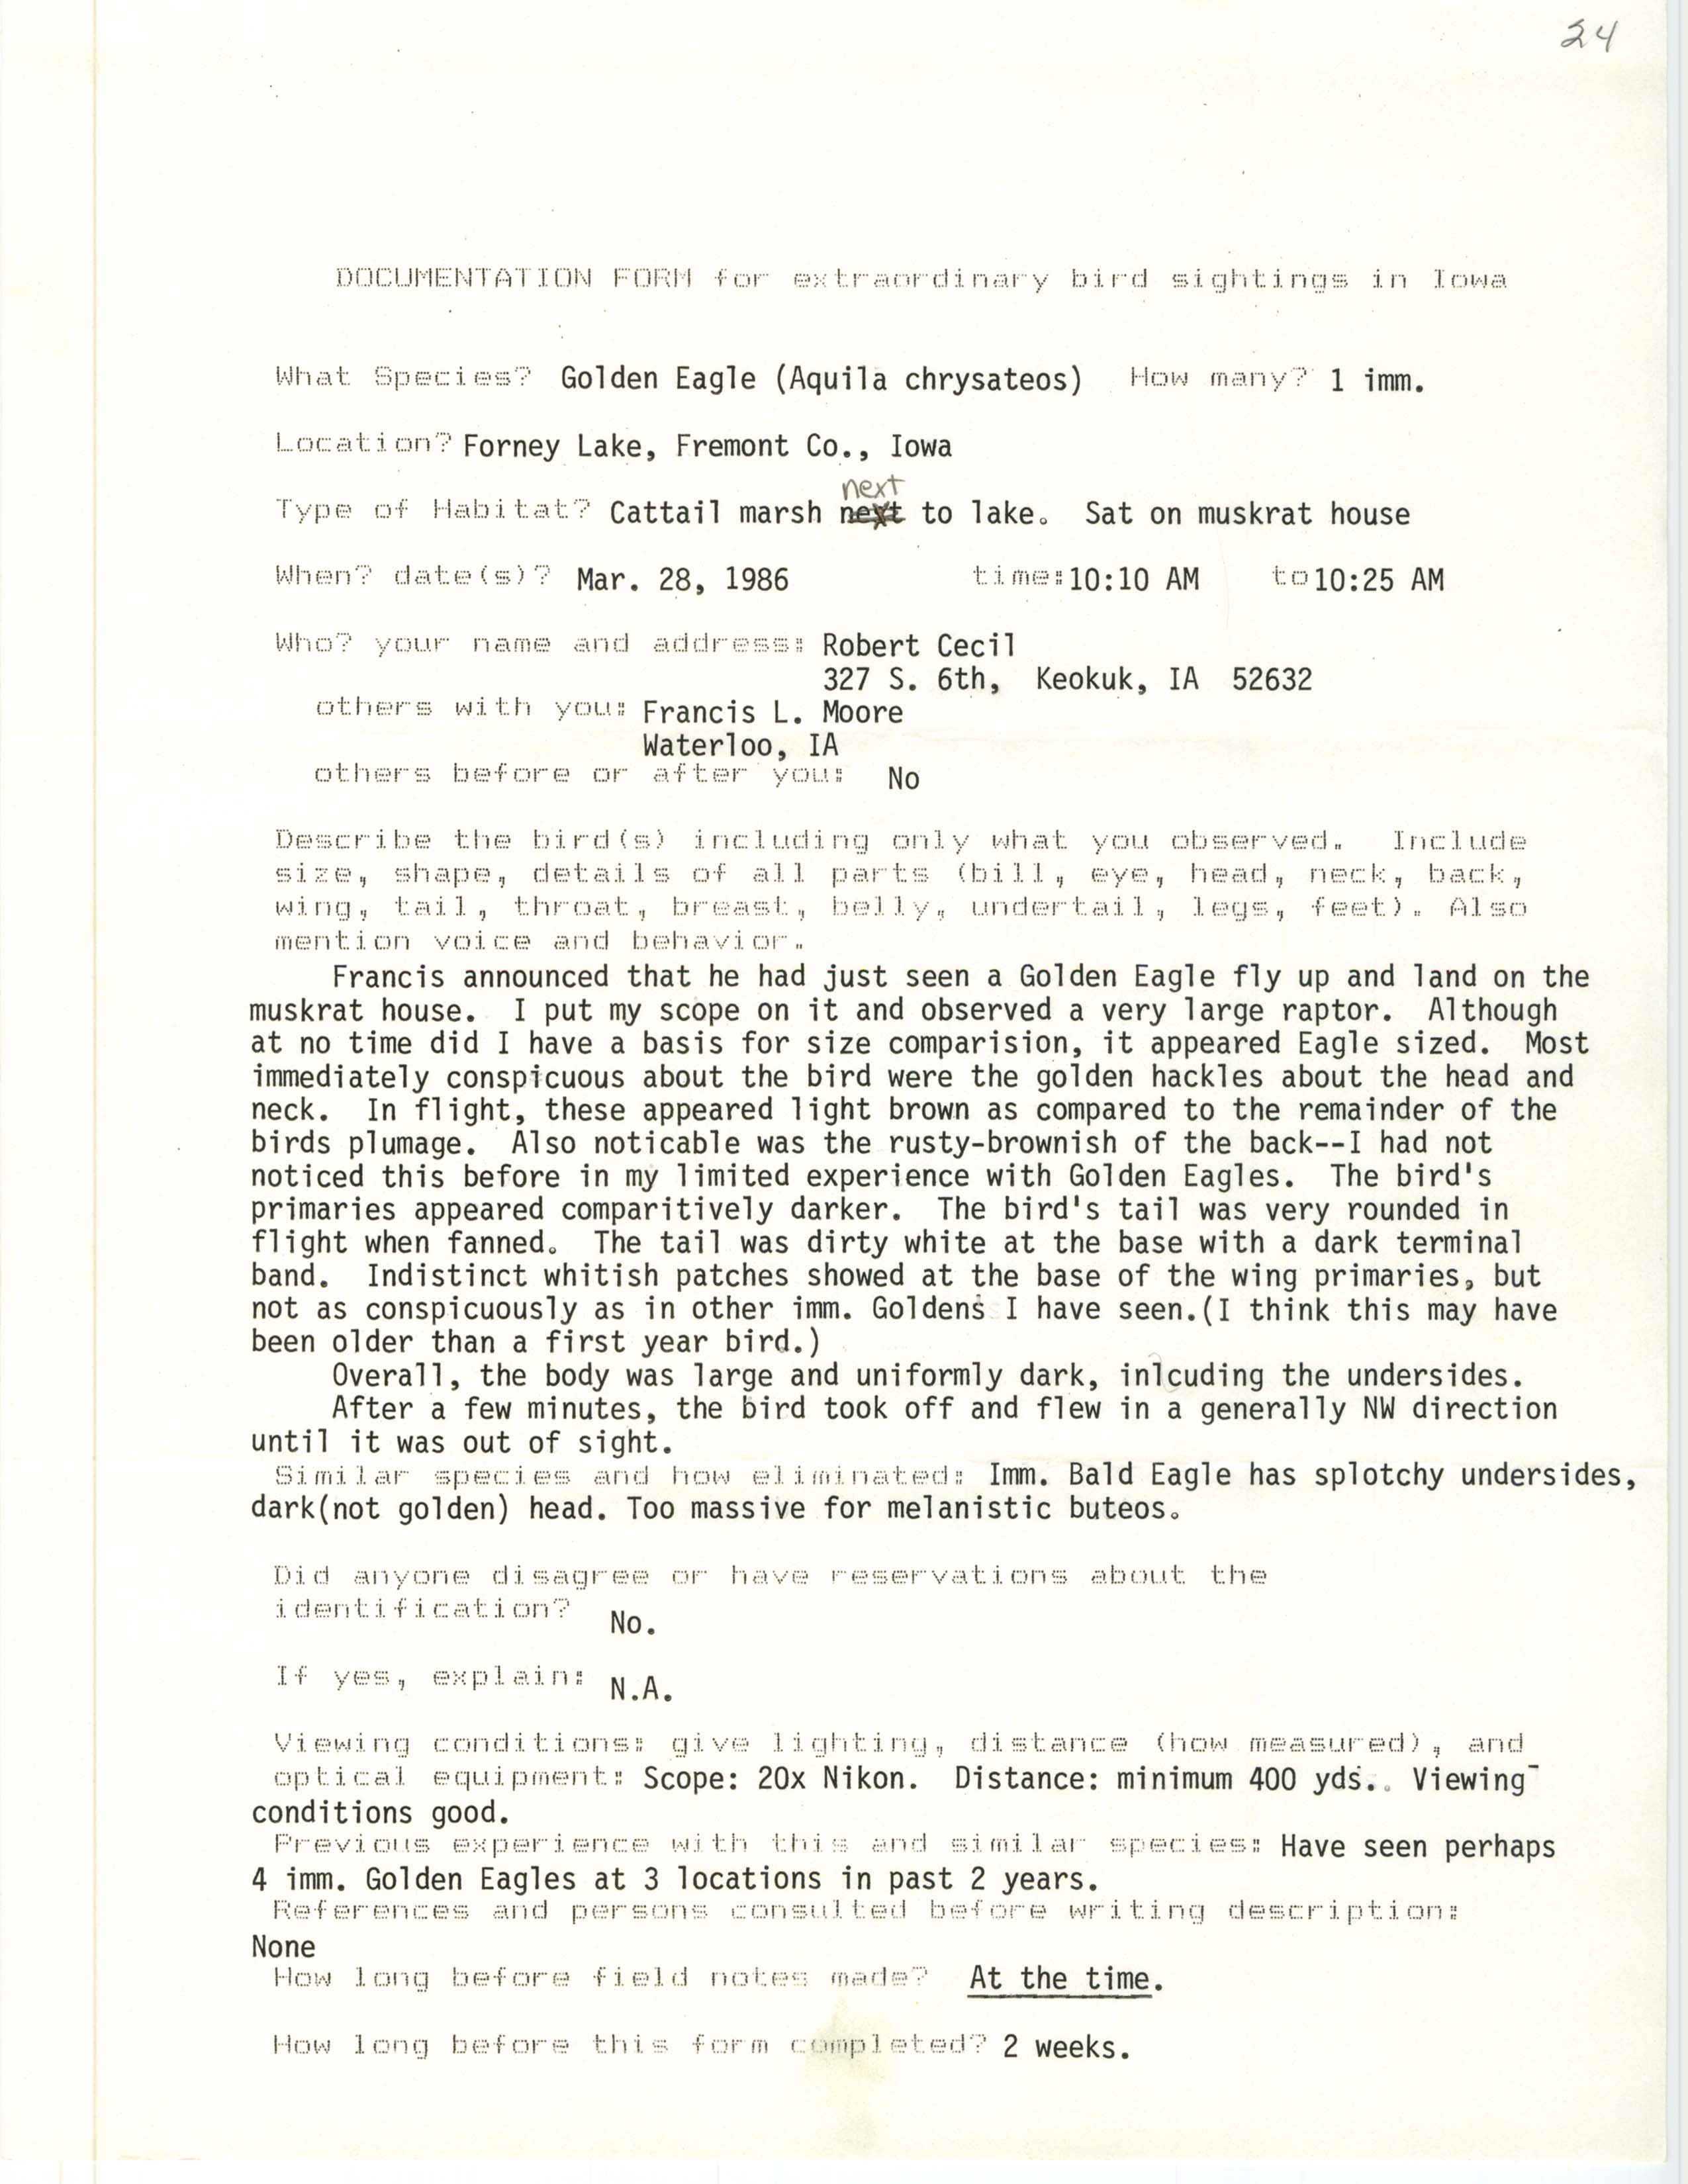 Rare bird documentation form for Golden Eagle at Forney Lake, 1986